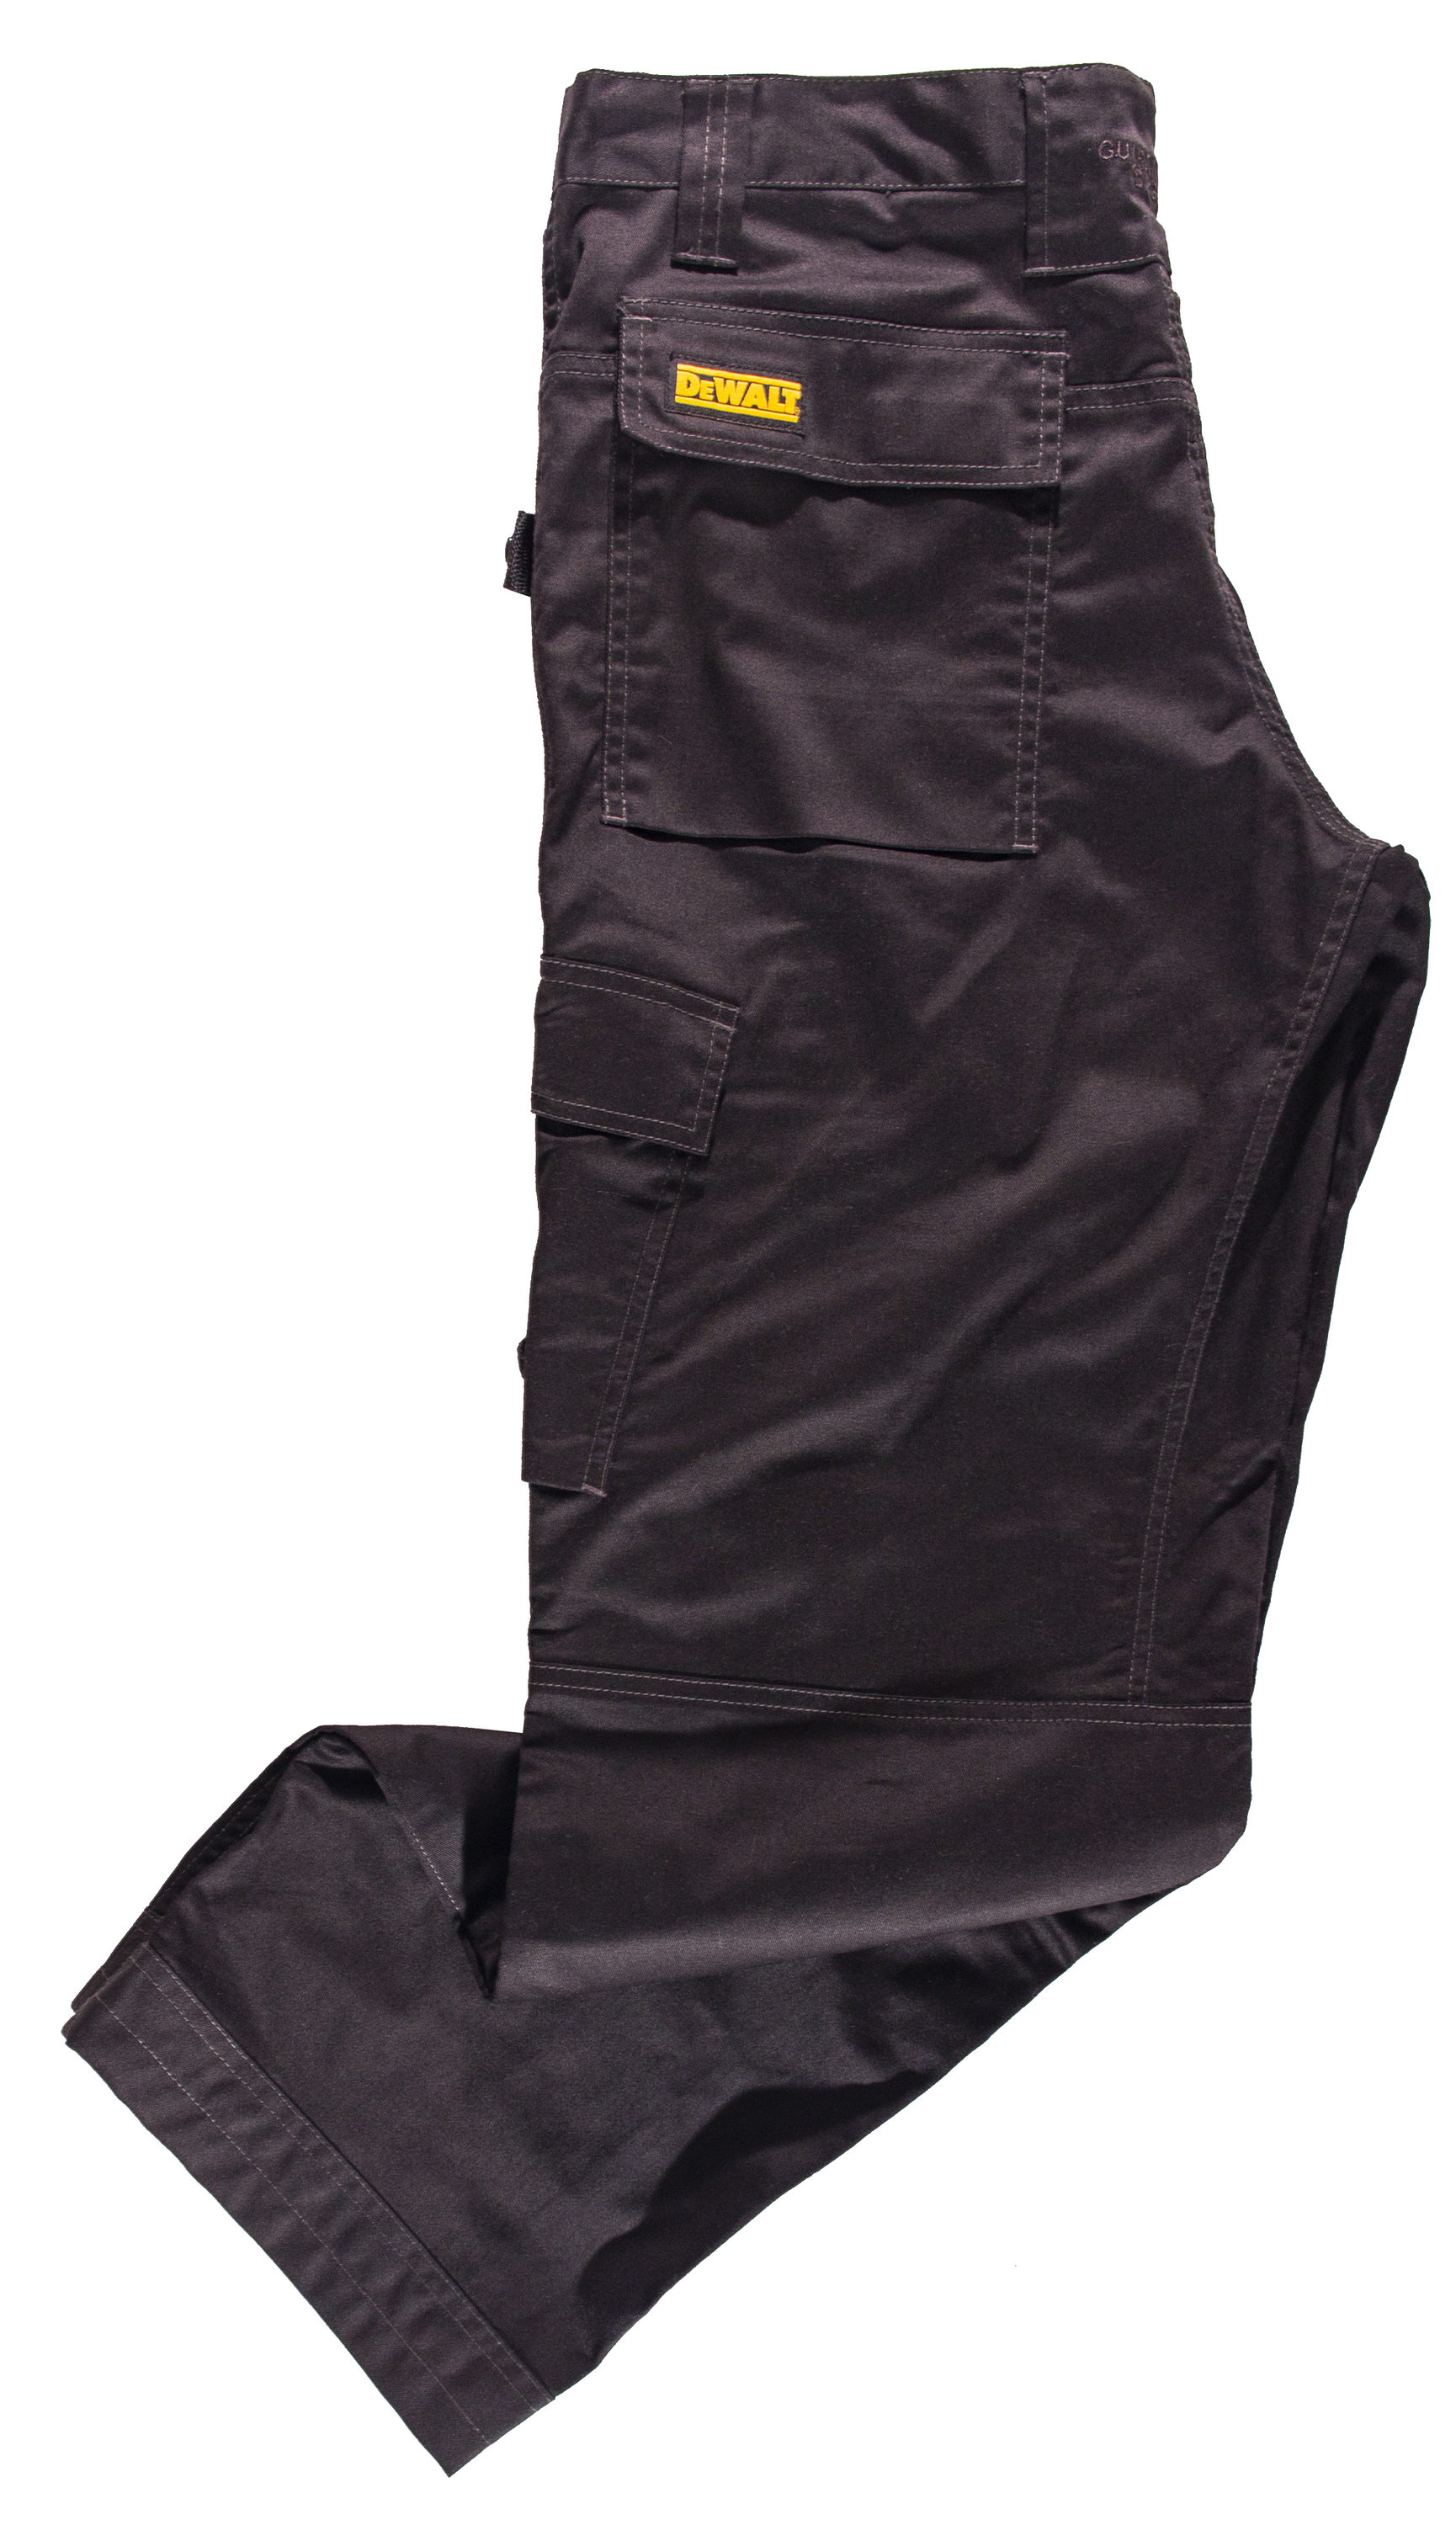 Dewalt Work Trousers  Black Pro Tradesman with Holster Pockets  Low Rise  Waist  eBay